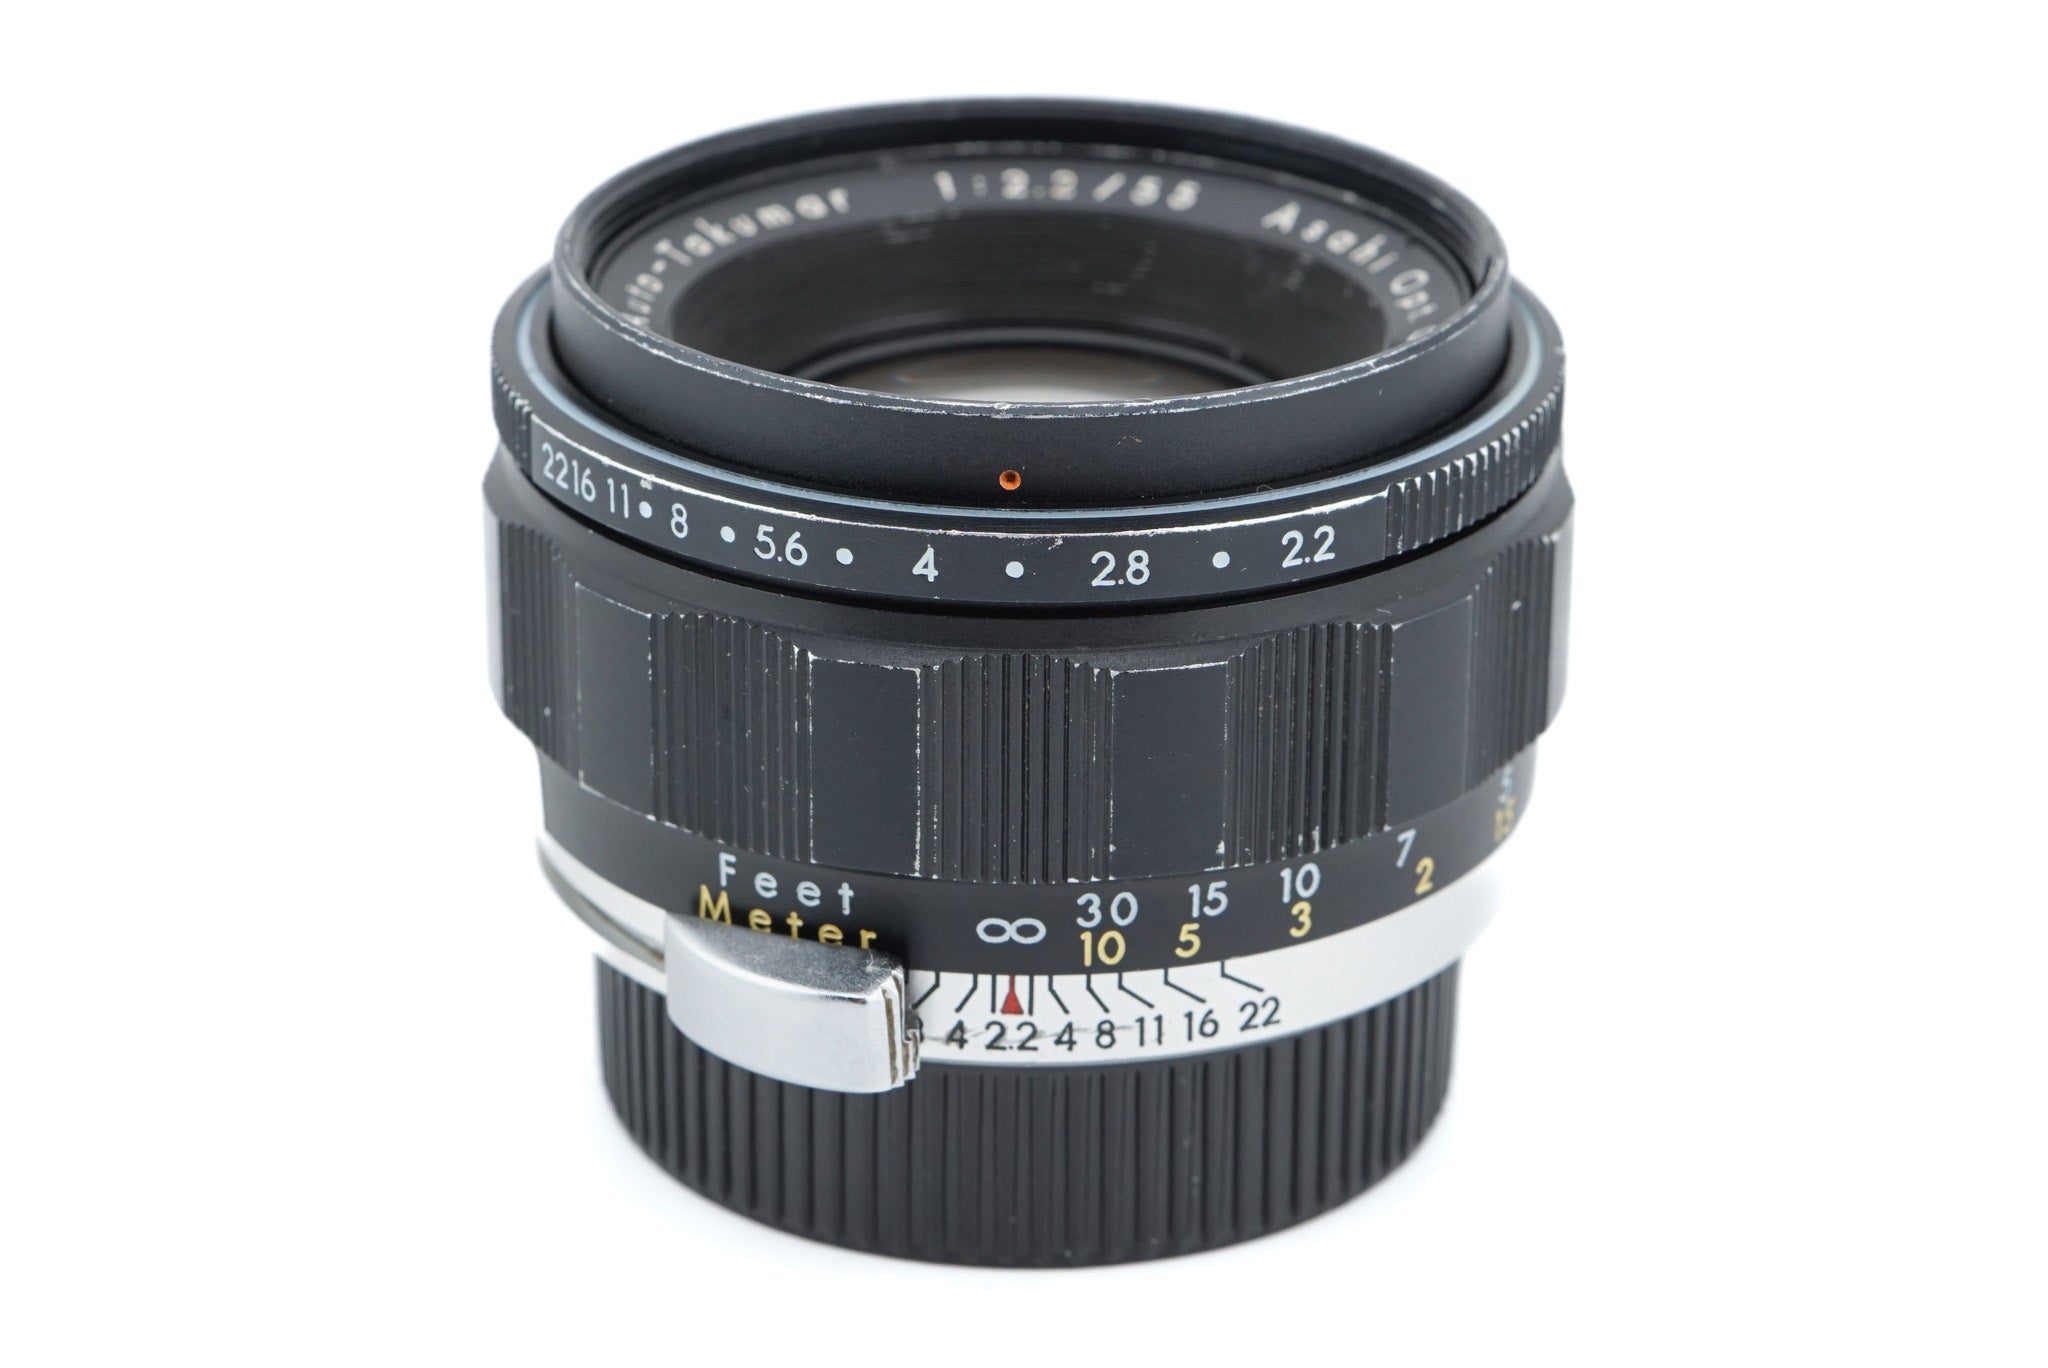 Pentax 55mm f2.2 Auto-Takumar - Lens